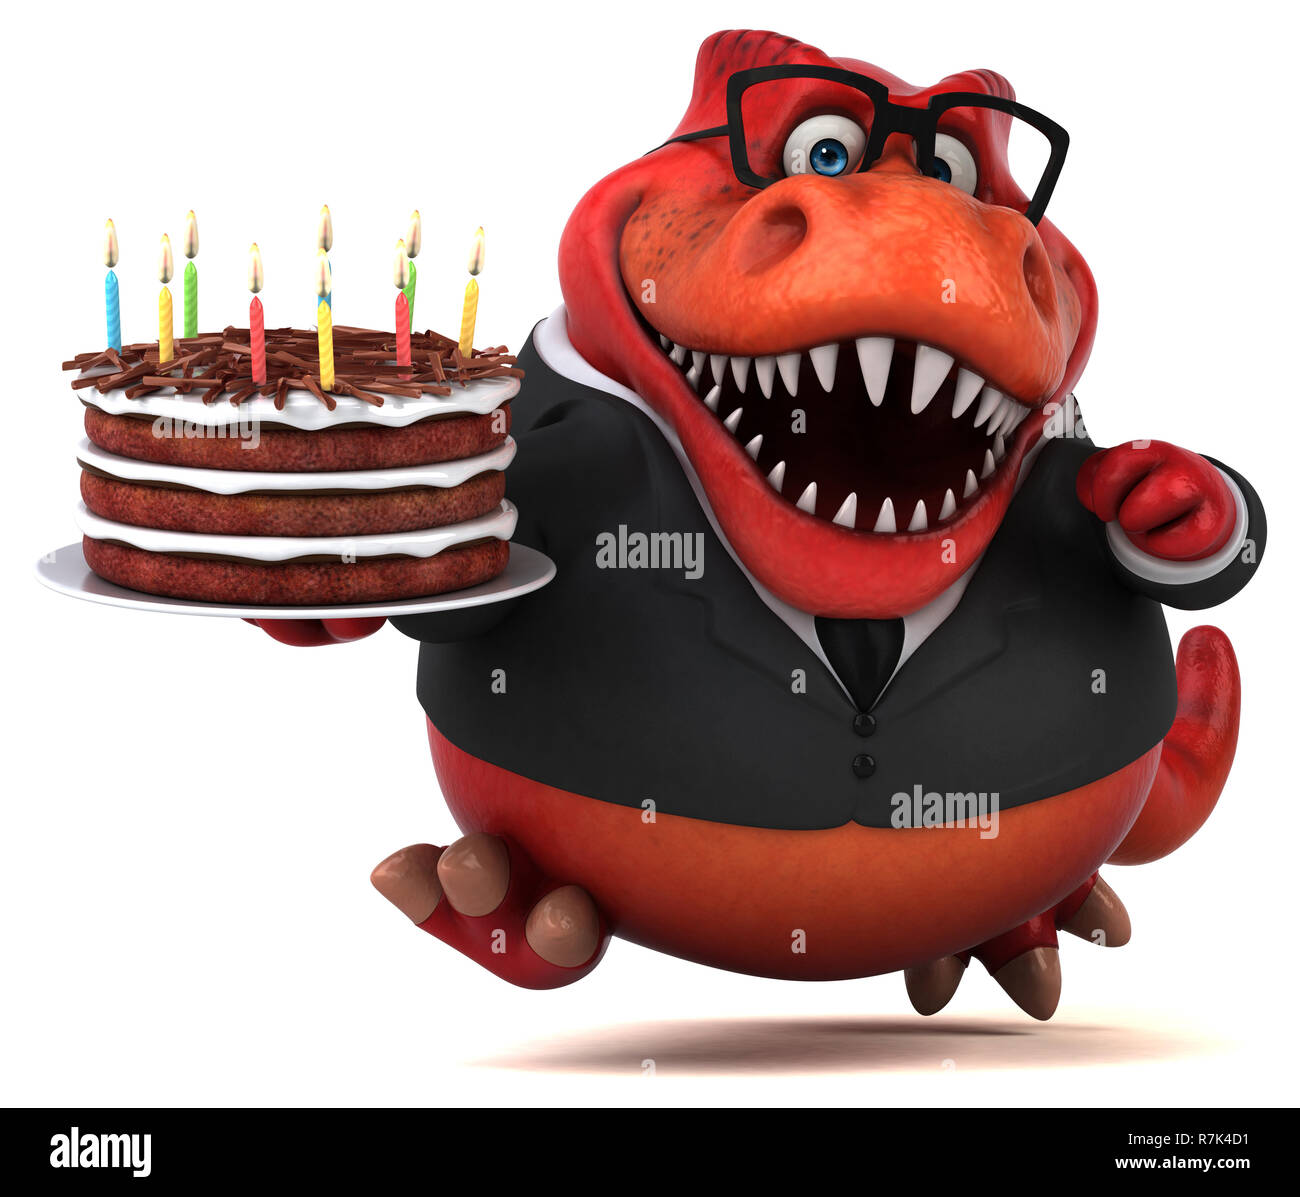 Dinosaur cake Imágenes recortadas de stock - Alamy